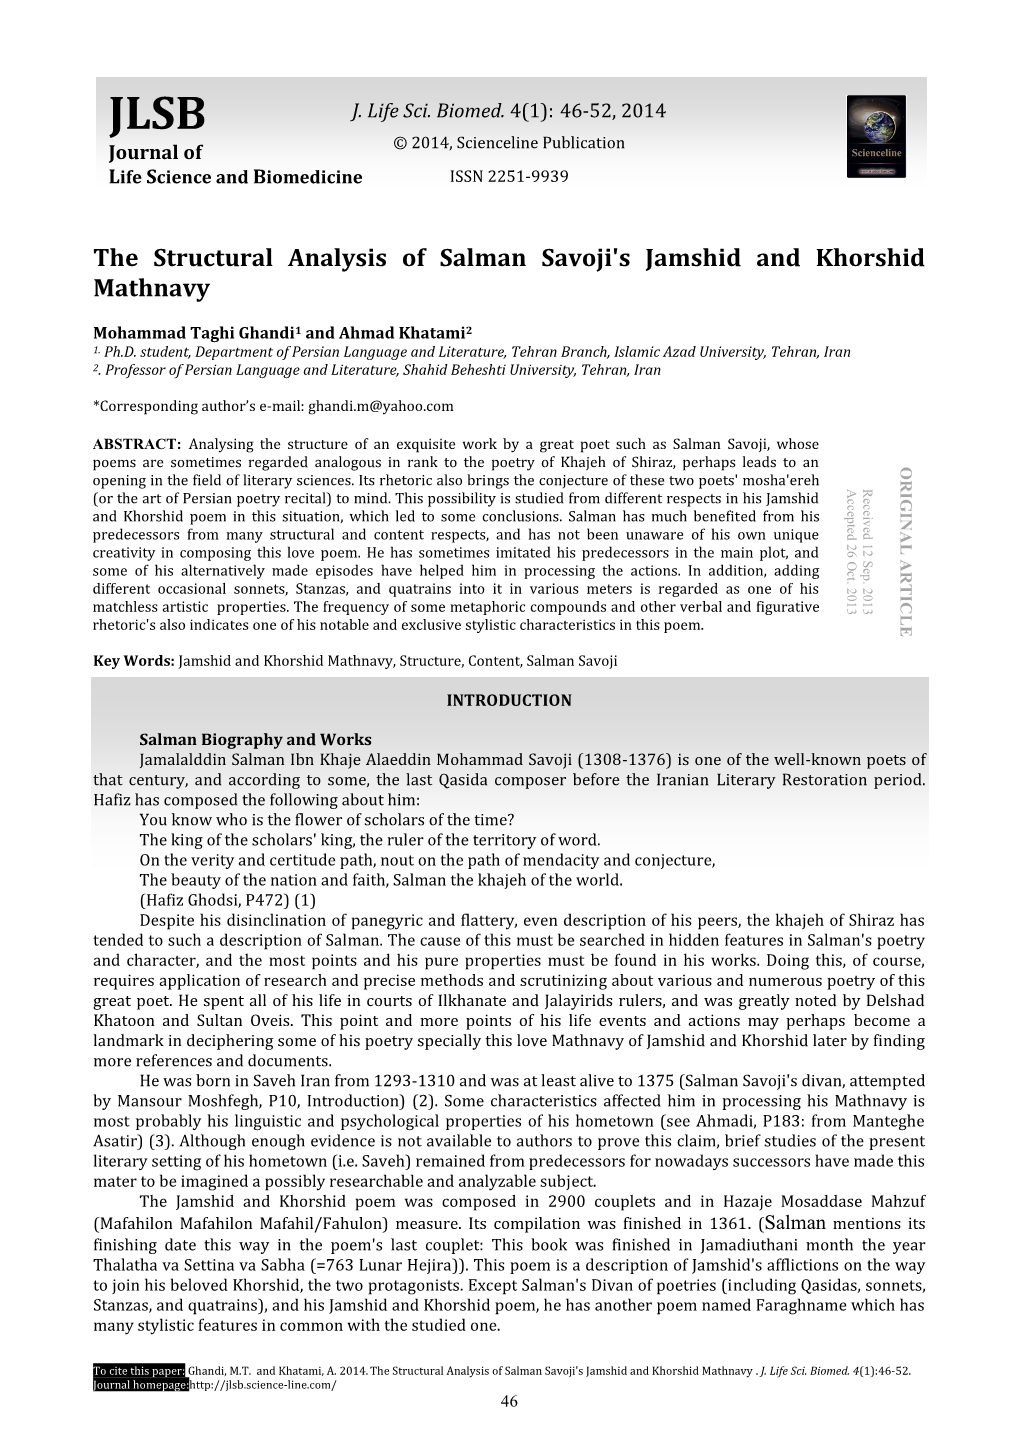 The Structural Analysis of Salman Savoji's Jamshid and Khorshid Mathnavy